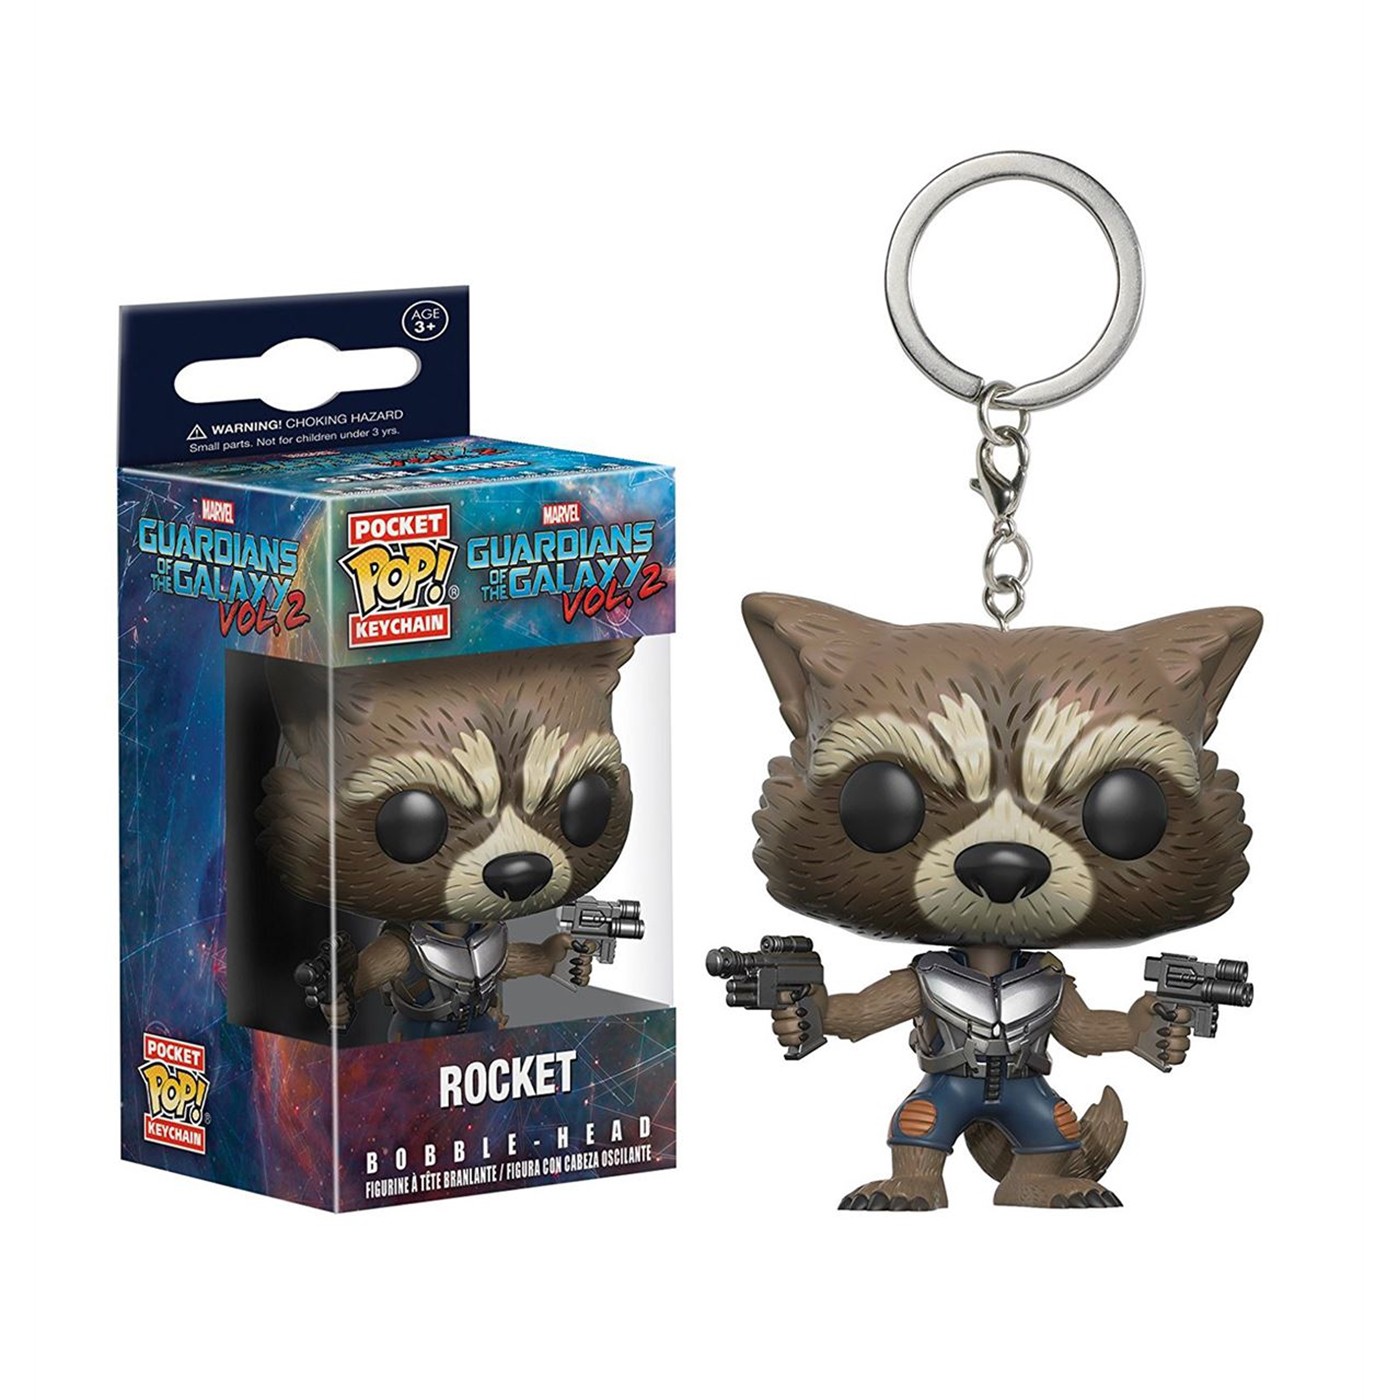 GOTG Vol. 2 Rocket Raccoon Funko Pocket Pop Keychain